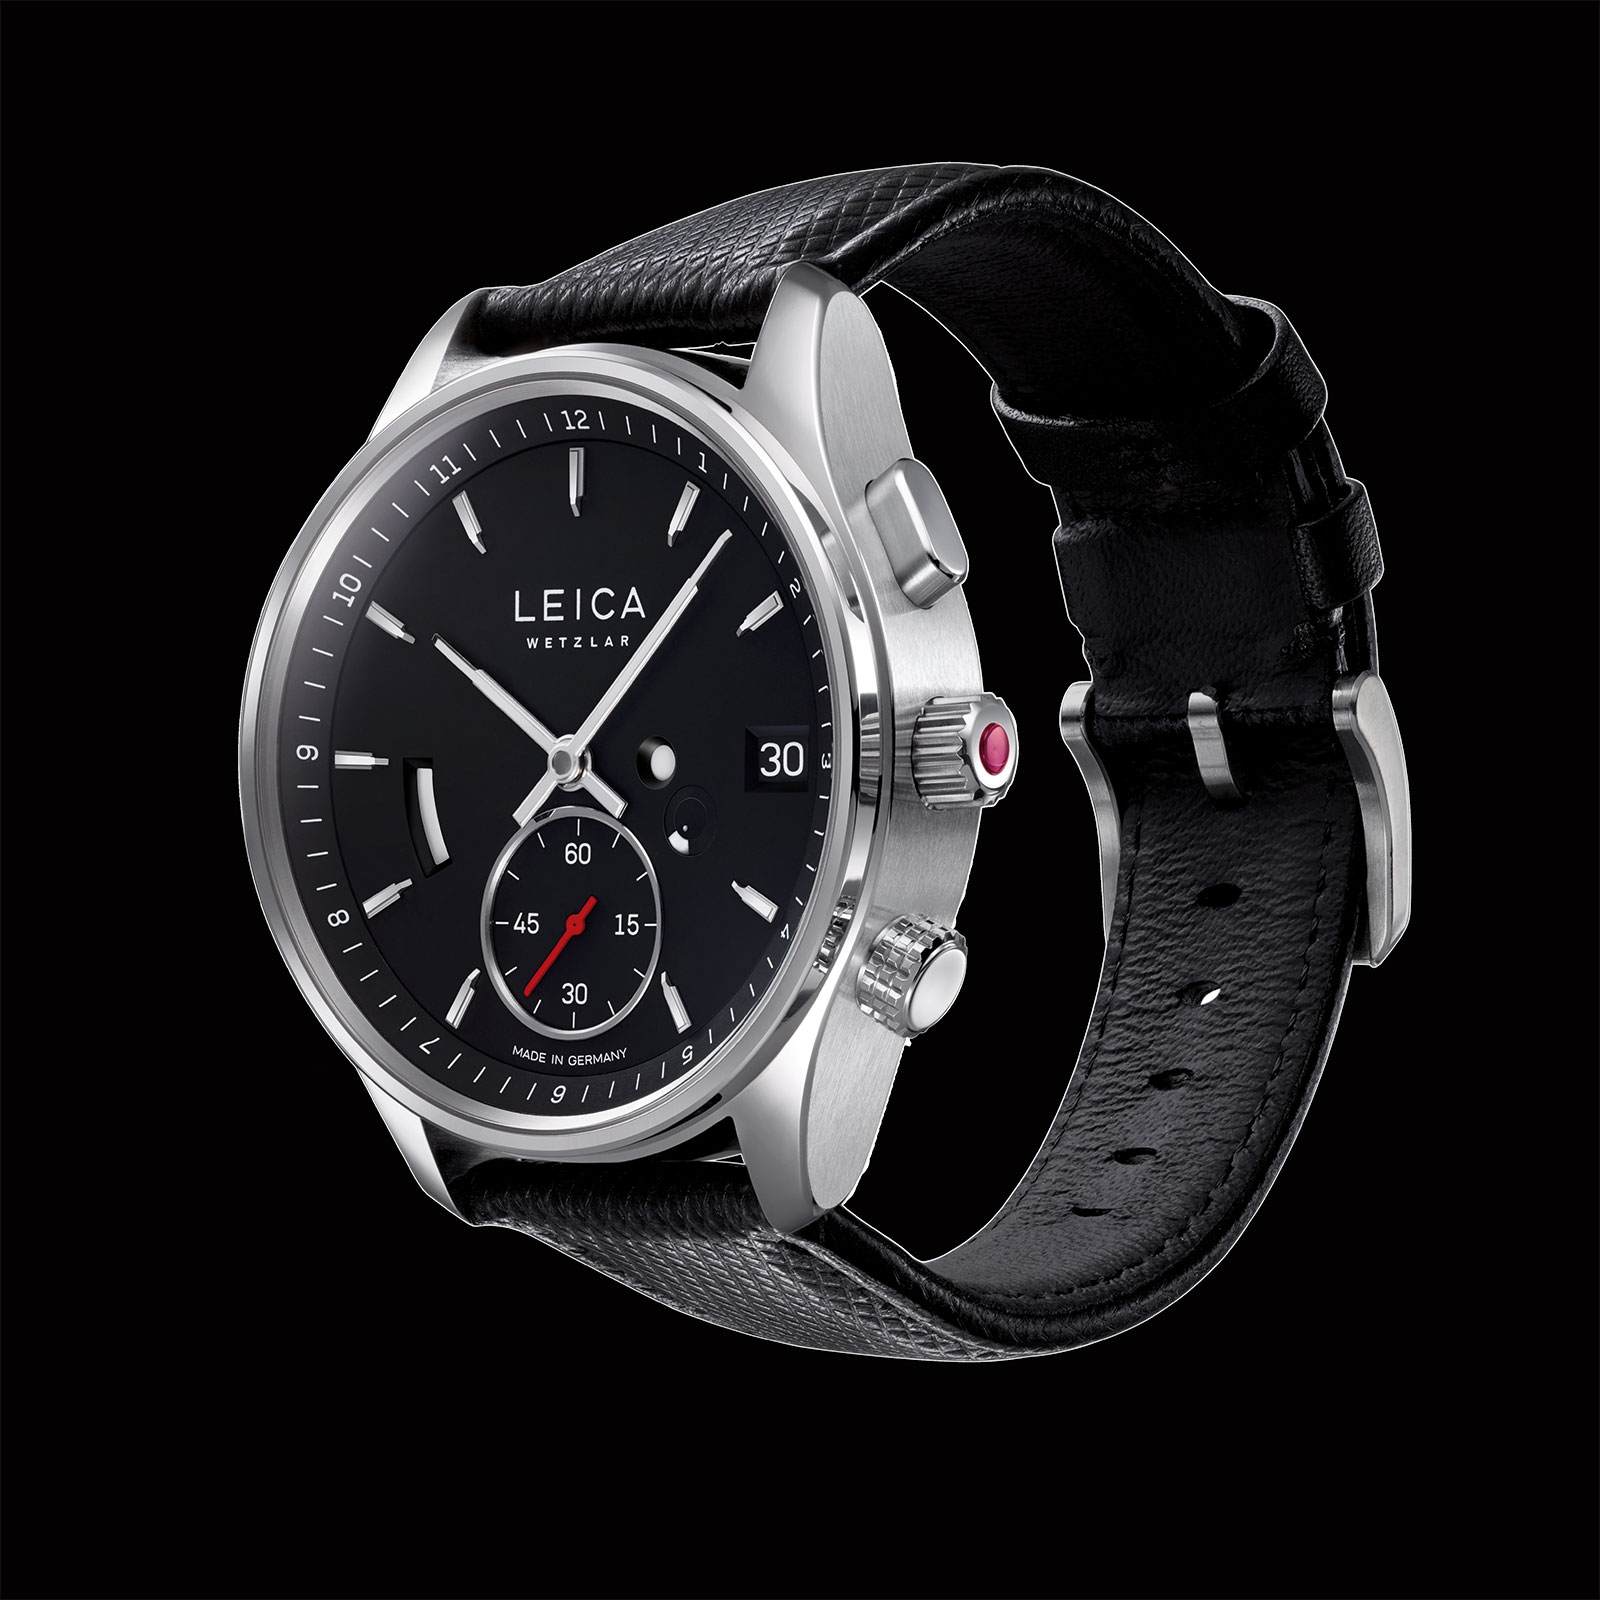 Leica L2 watch